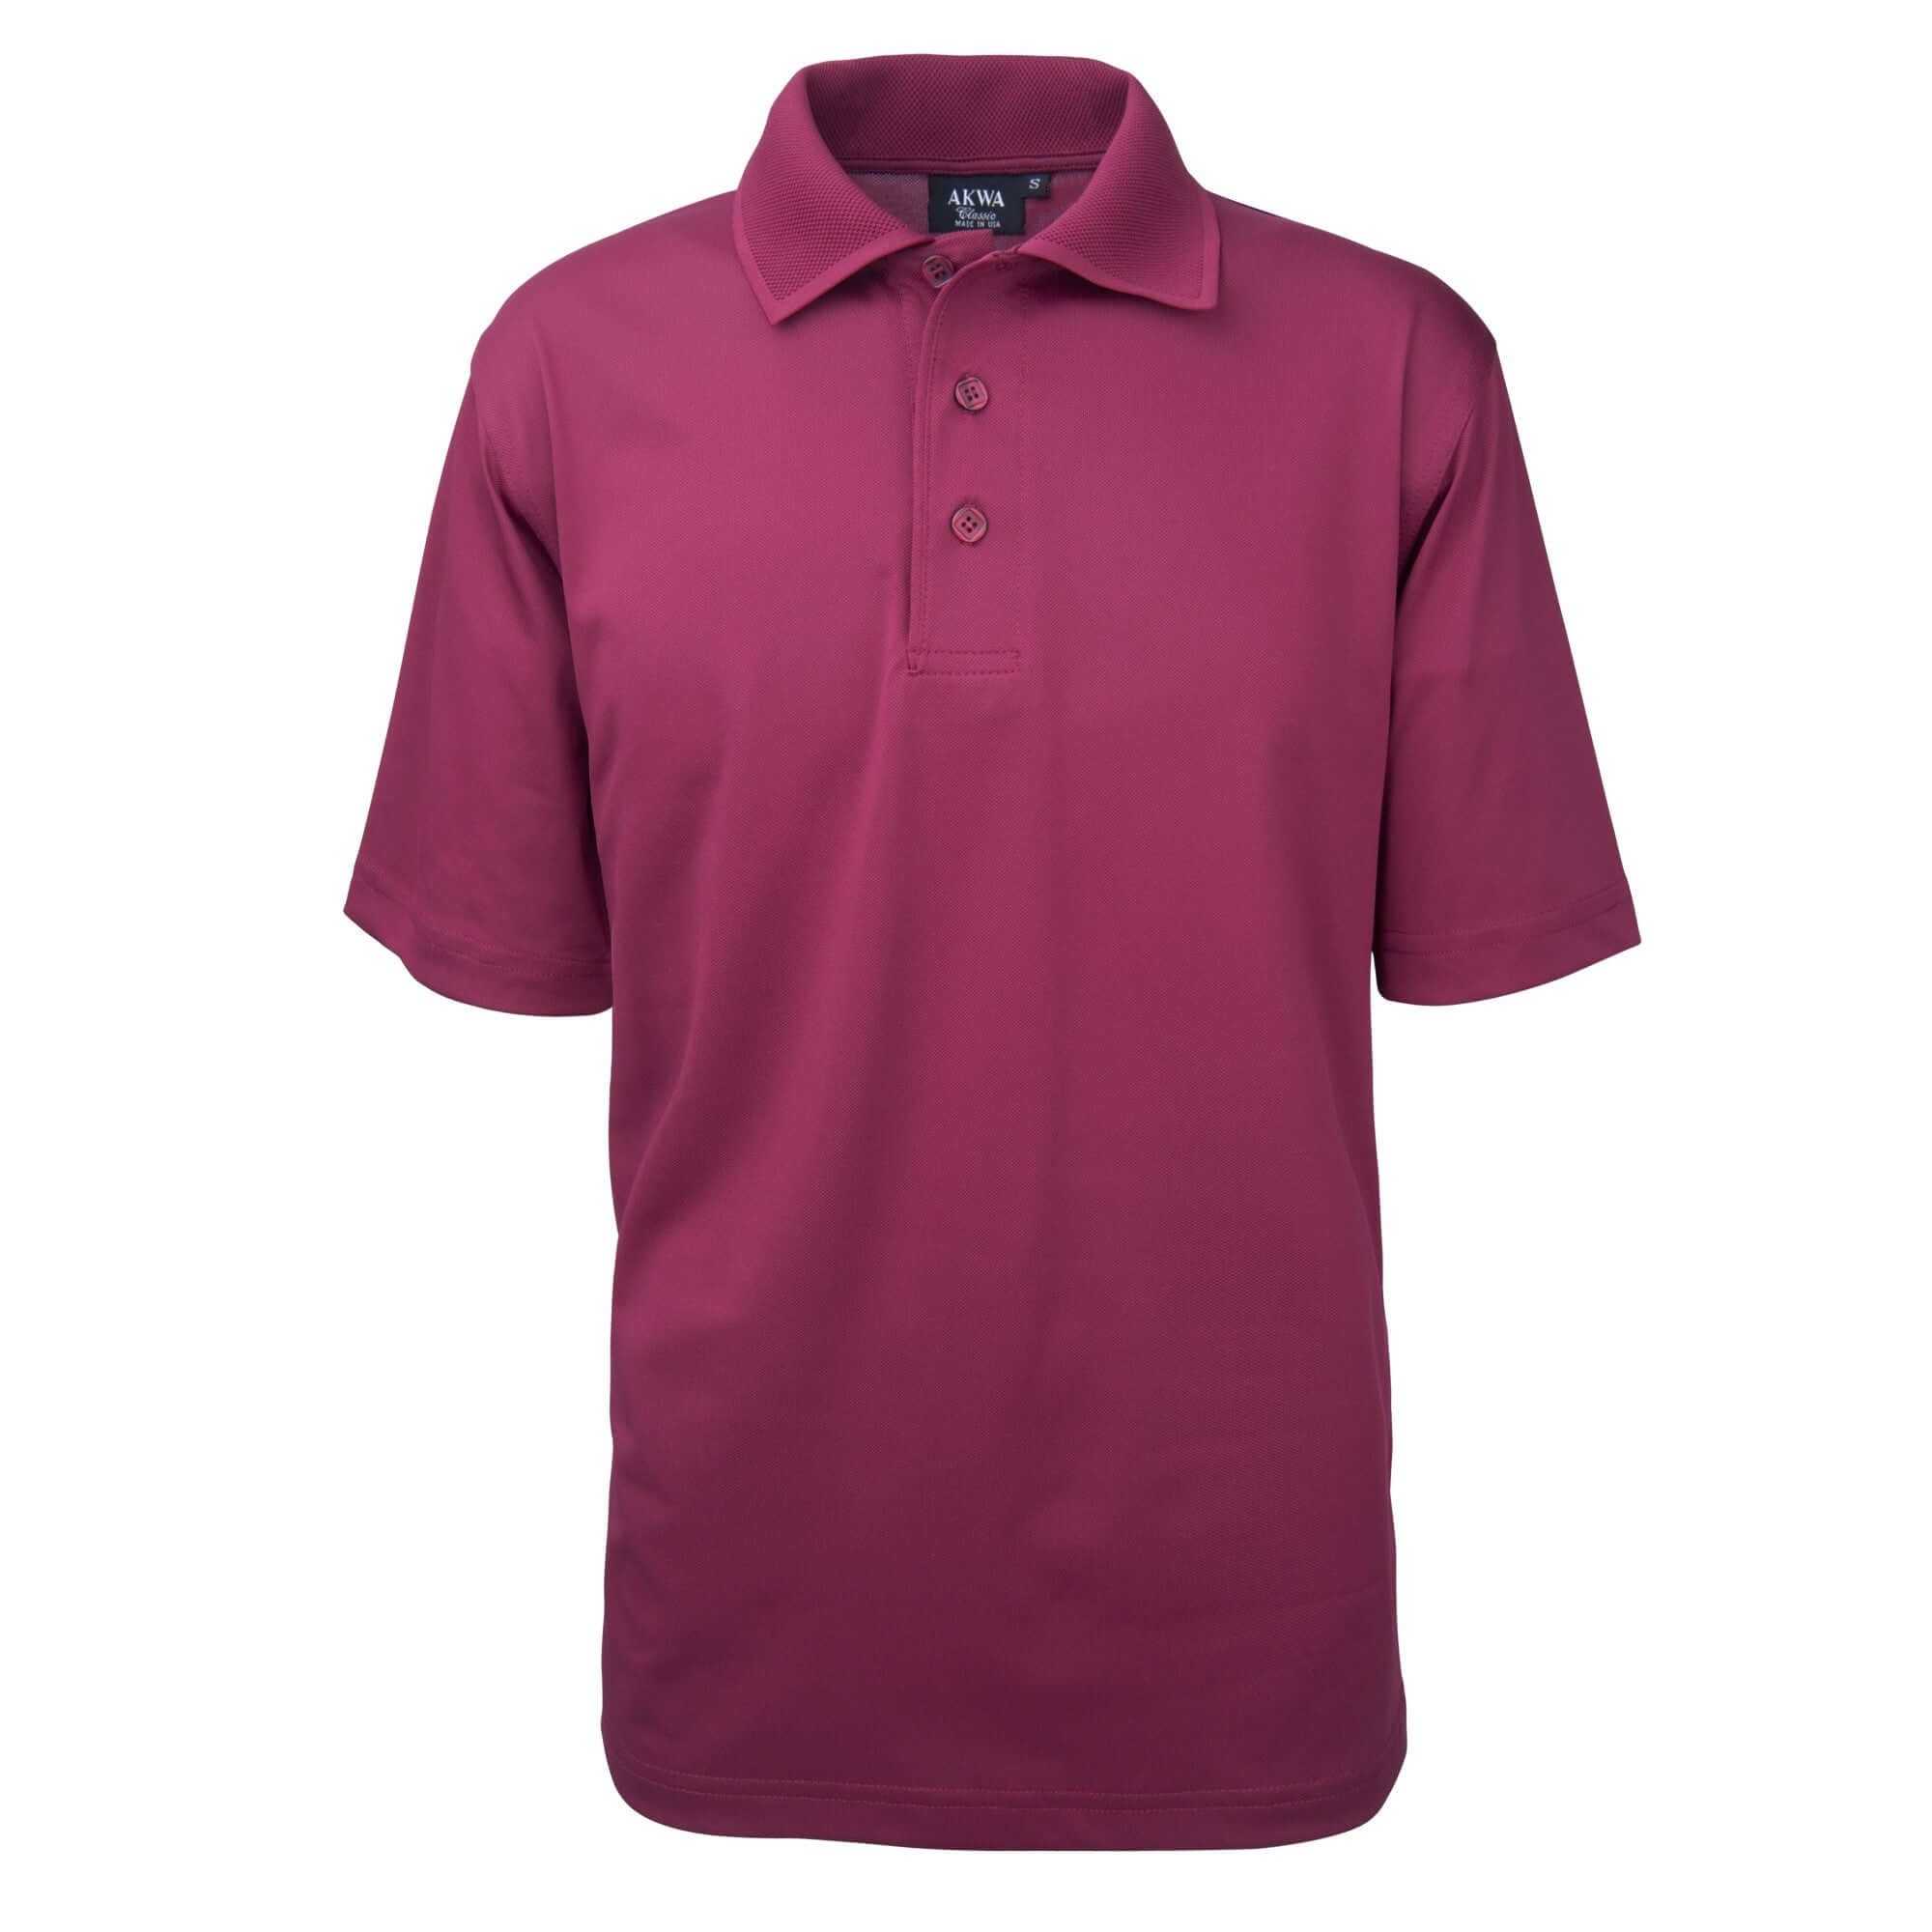 Men's Made in USA Tech Polo Shirt color_burgundy - the flag shirt